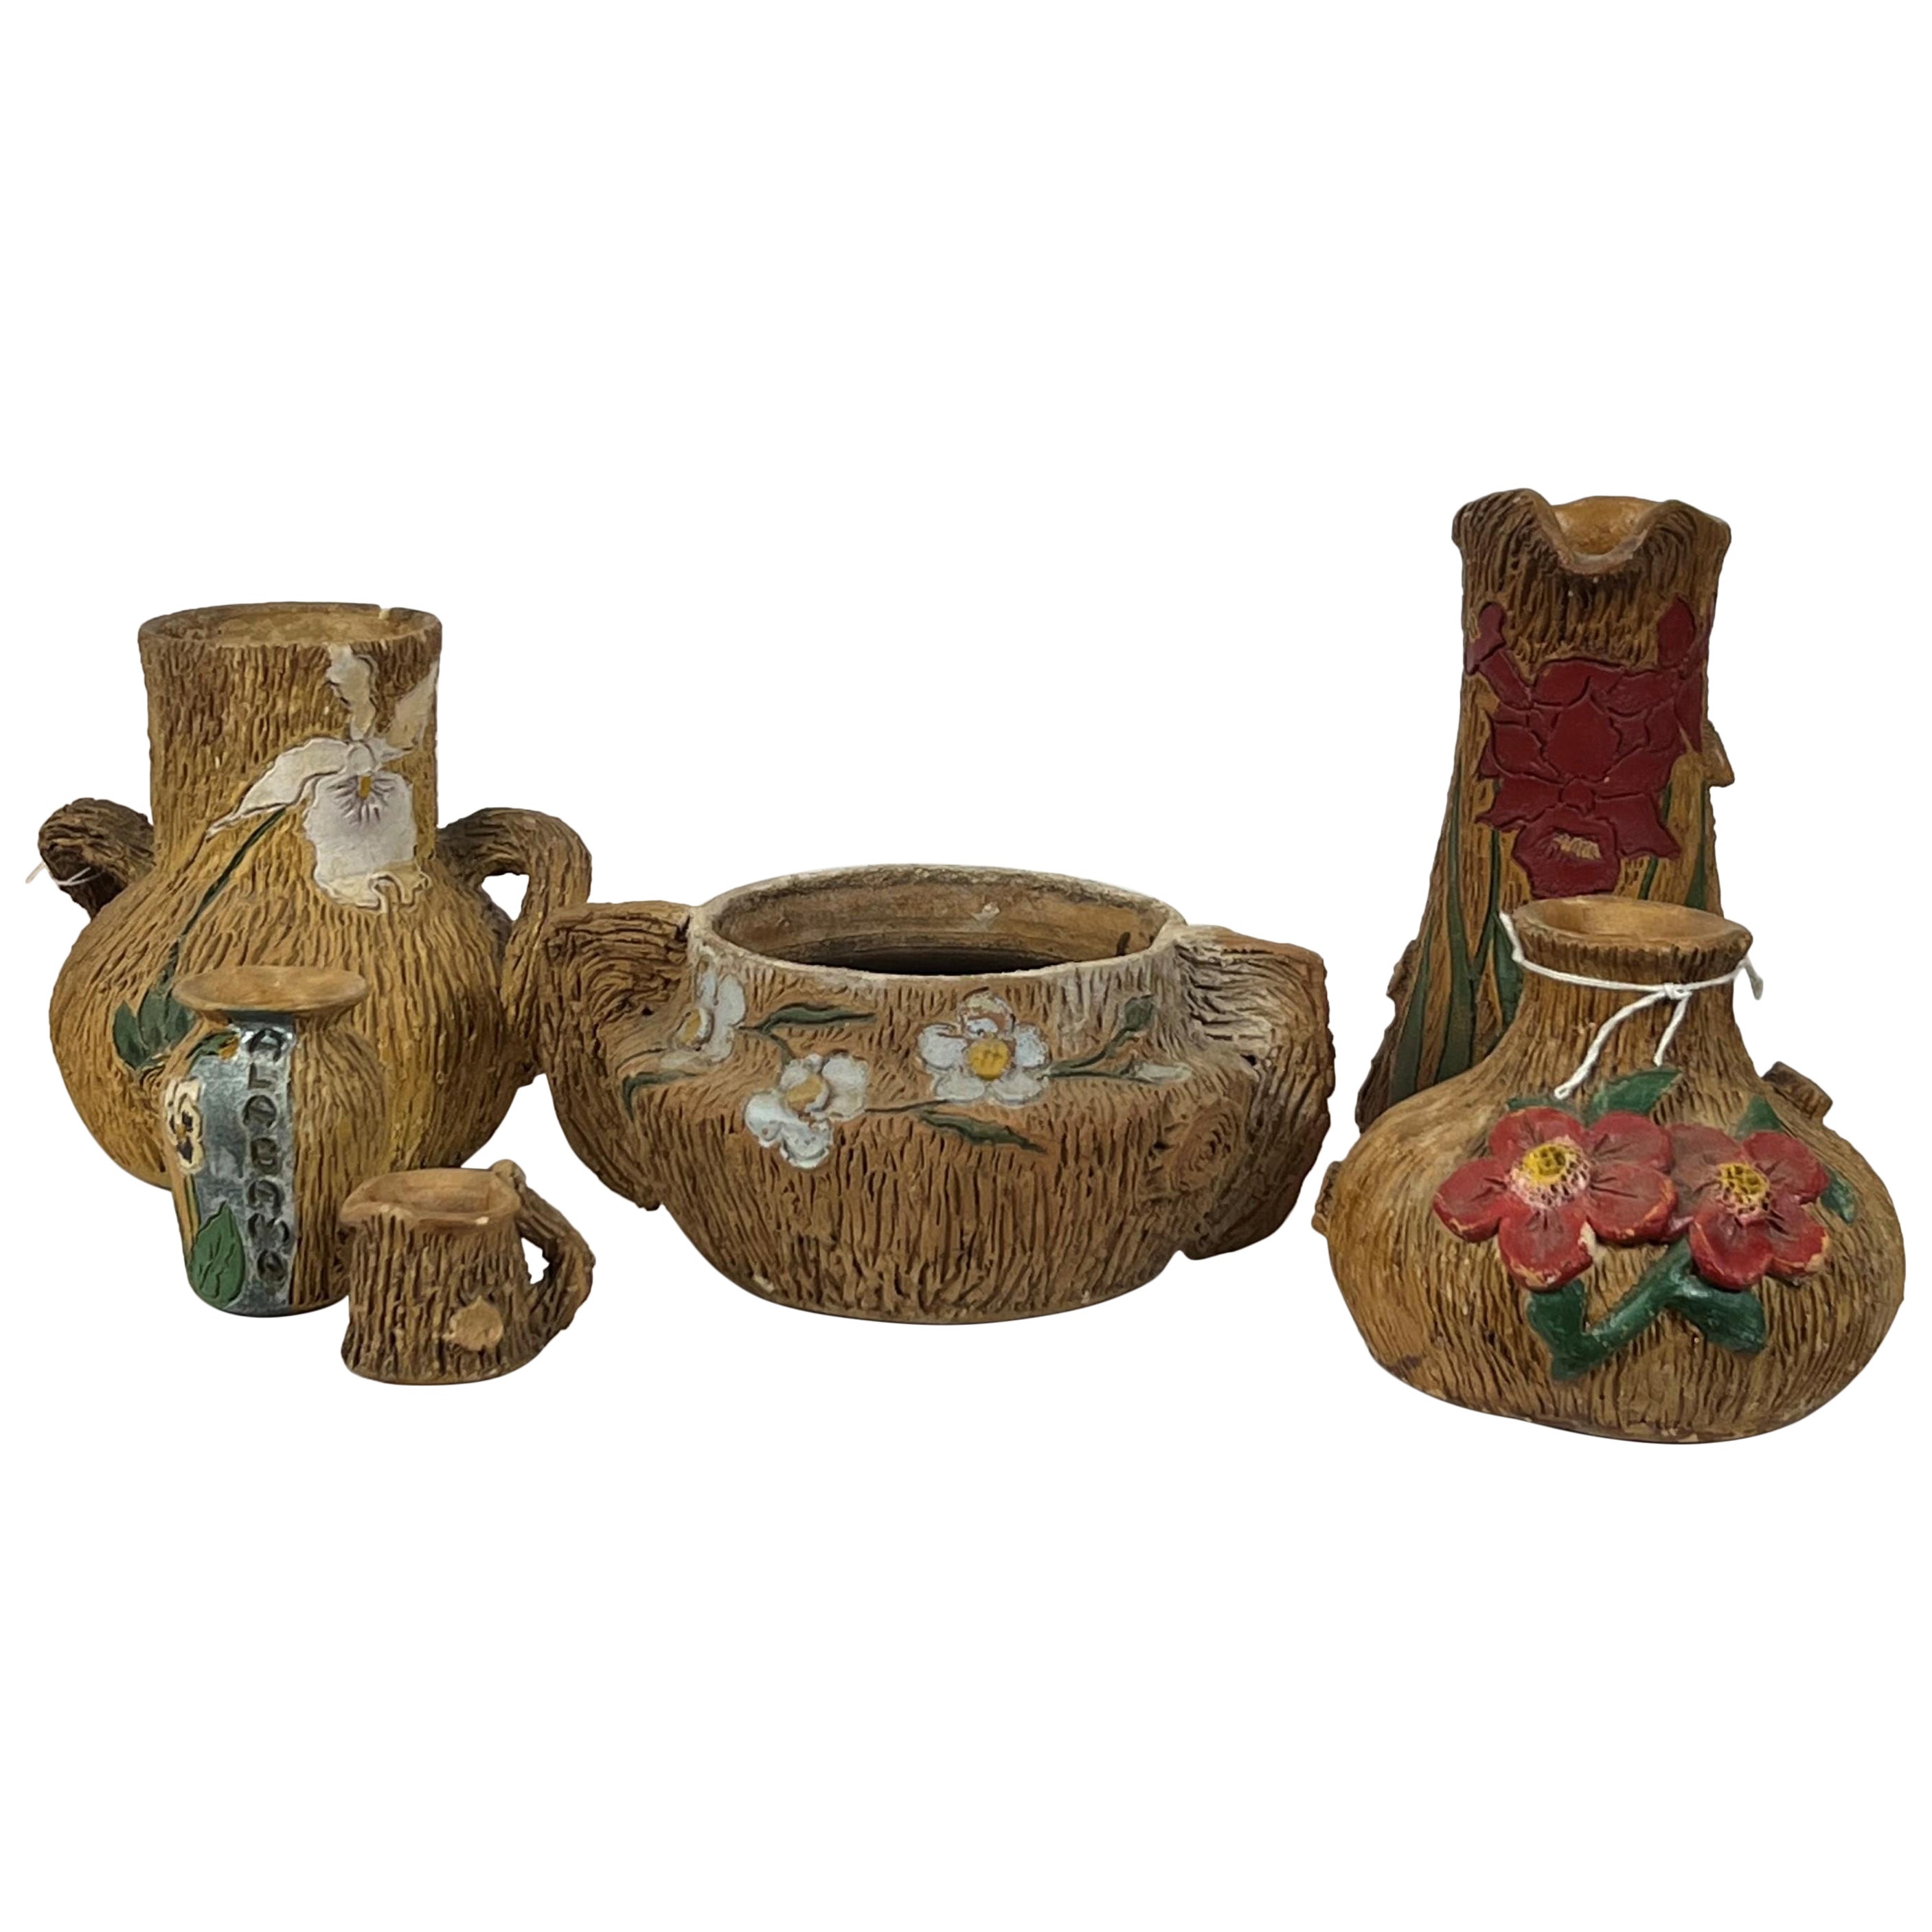 Alabama Folk Art Pottery grouping Montgomery area pre-WW2 anonymous craftsman